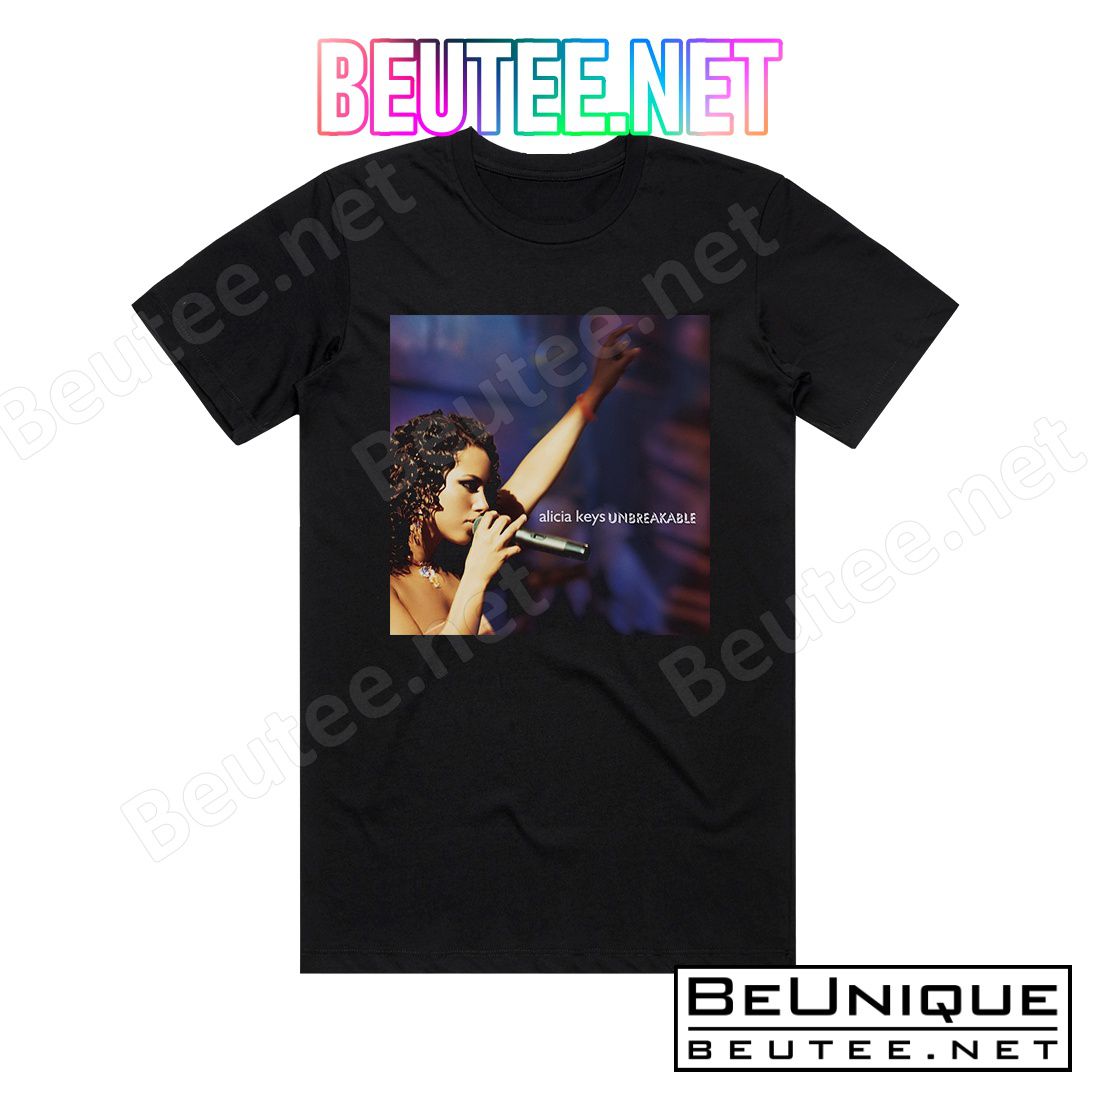 Alicia Keys Unbreakable Album Cover T-Shirt